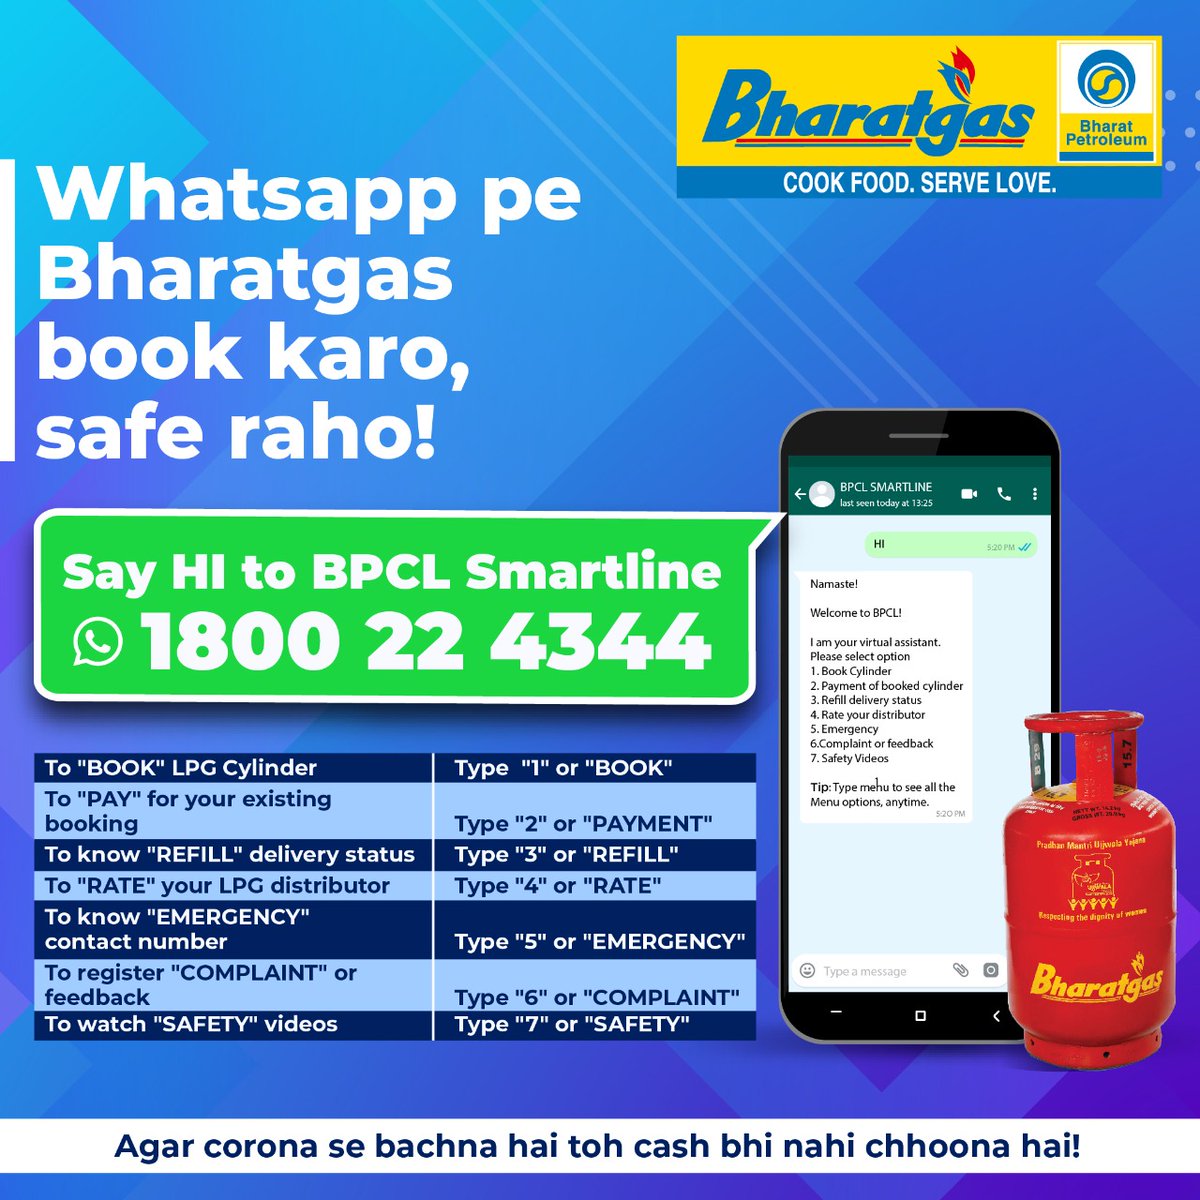 Book your Bharatgas refill by just sending 'Hi' or '1' on our BPCL smartline no. and be safe.
 #Digital  #bharatgas #coronavirus #unlock4guidelines #DigitalIndia 
@mukuljain_ @BPCLLPG @BPCLtd @bpclpiyala @BPCL_StateDelhi @_DigitalIndia @PetroleumMin @dpradhanbjp @PMOIndia